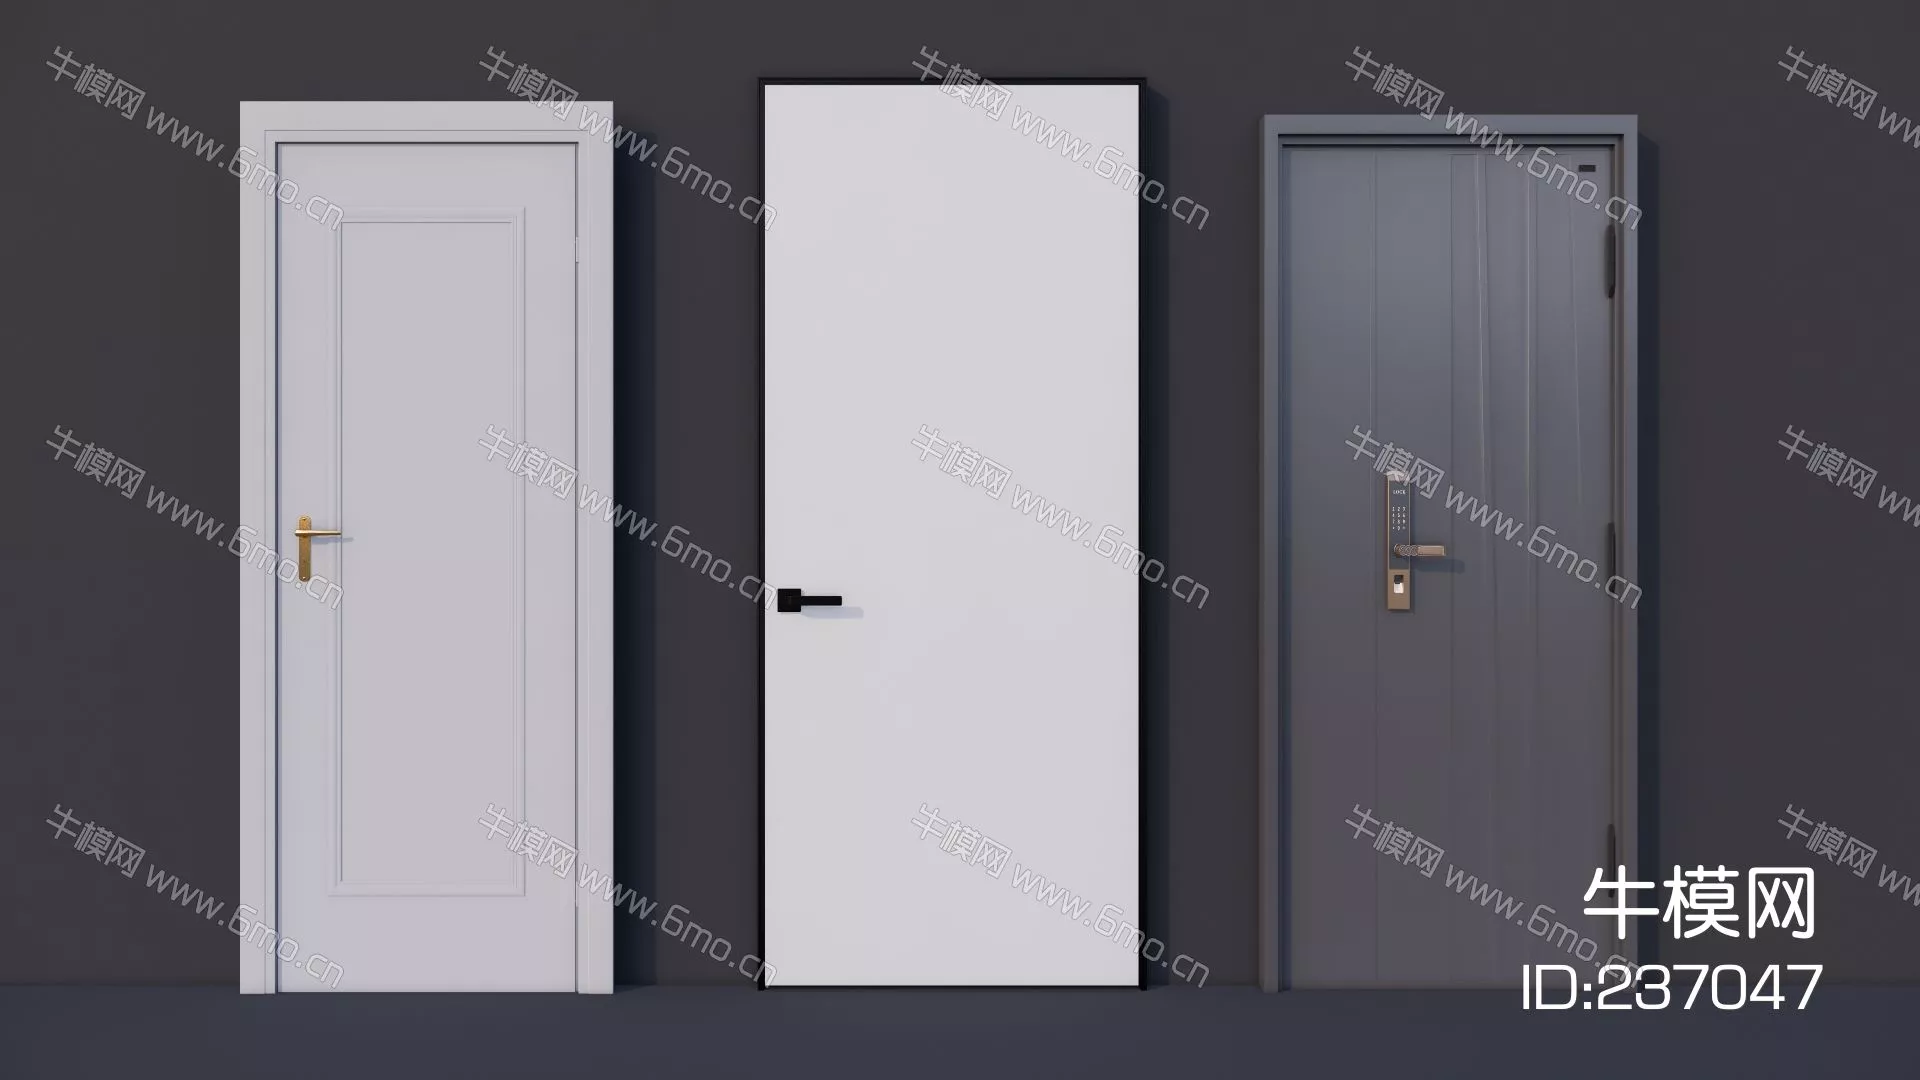 MODERN DOOR AND WINDOWS - SKETCHUP 3D MODEL - ENSCAPE - 237047